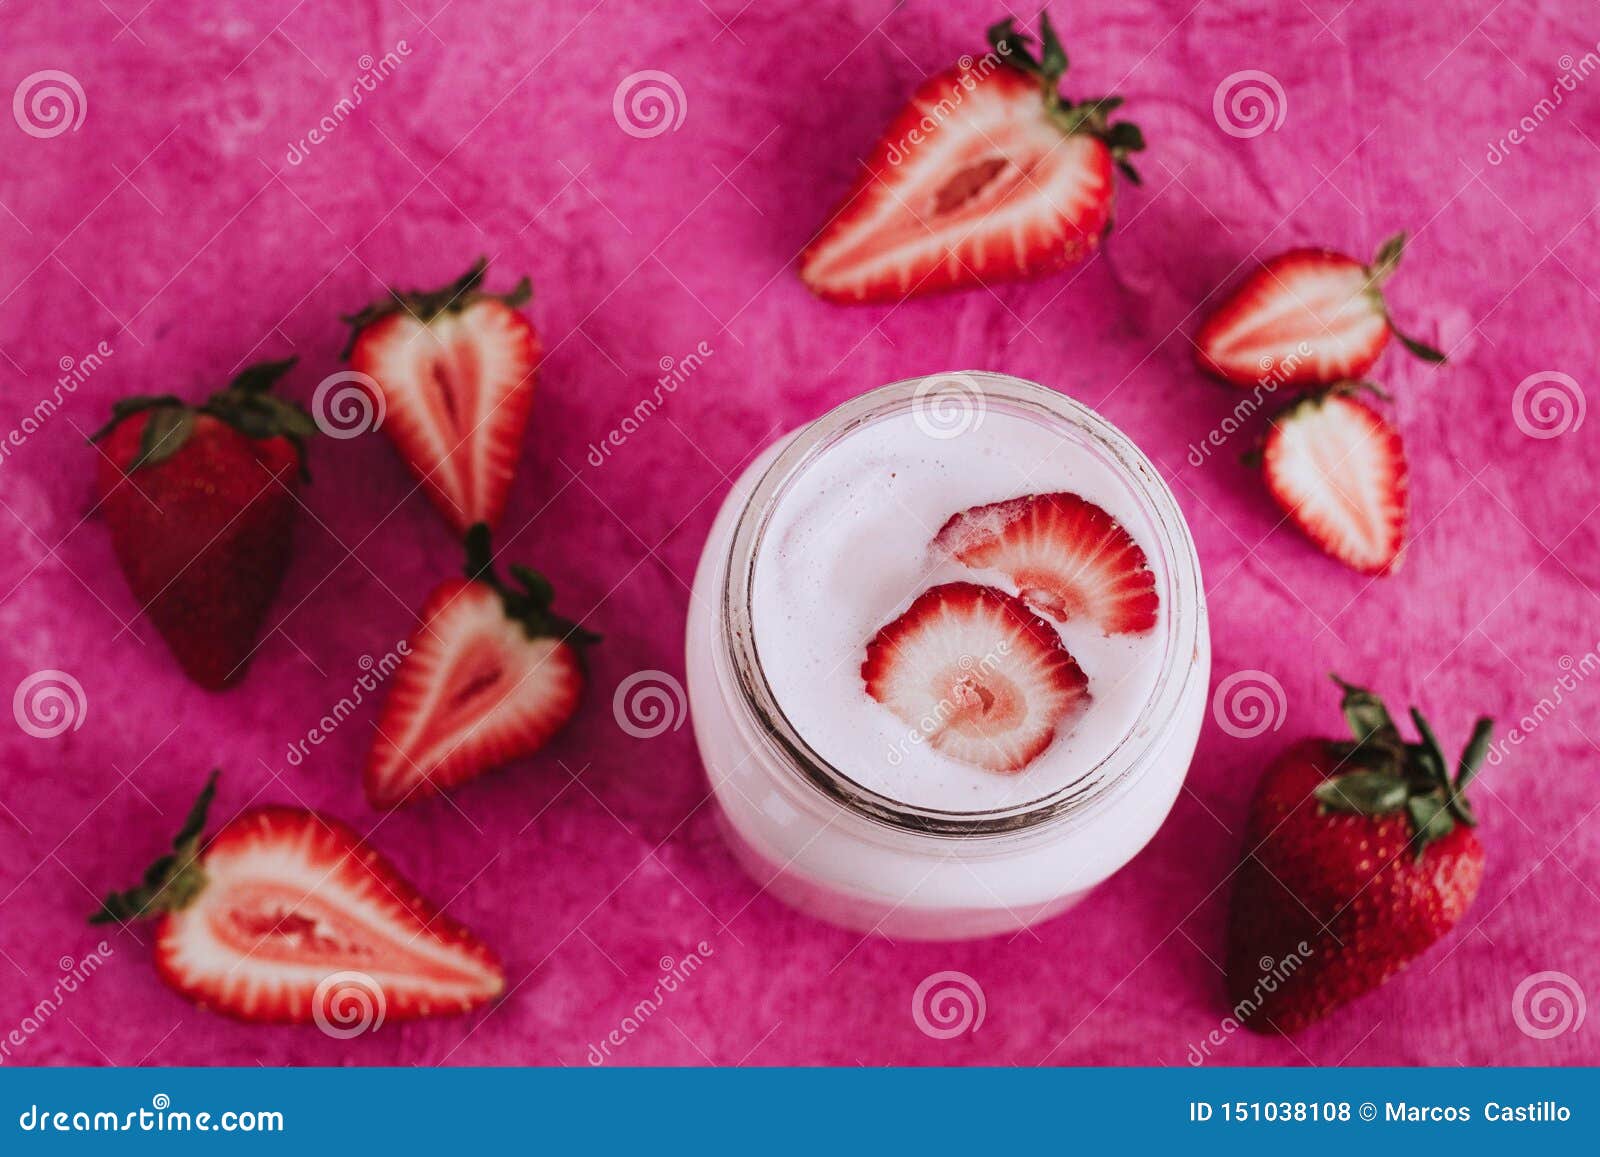 strawberry milkshake in the glass jar pink background